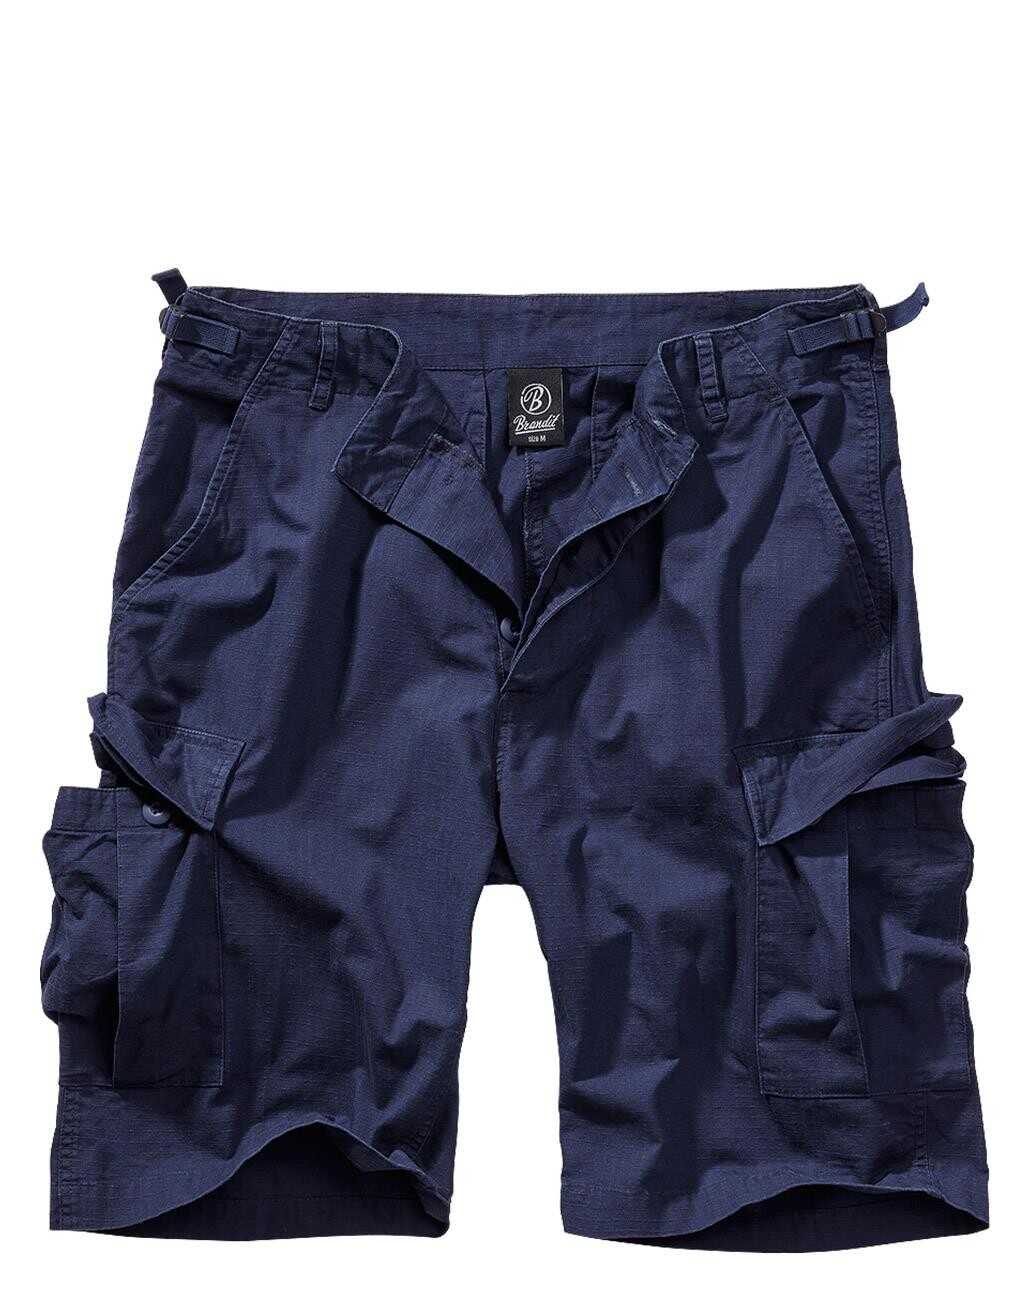 9: Brandit BDU Ripstop Shorts (Navy, S)